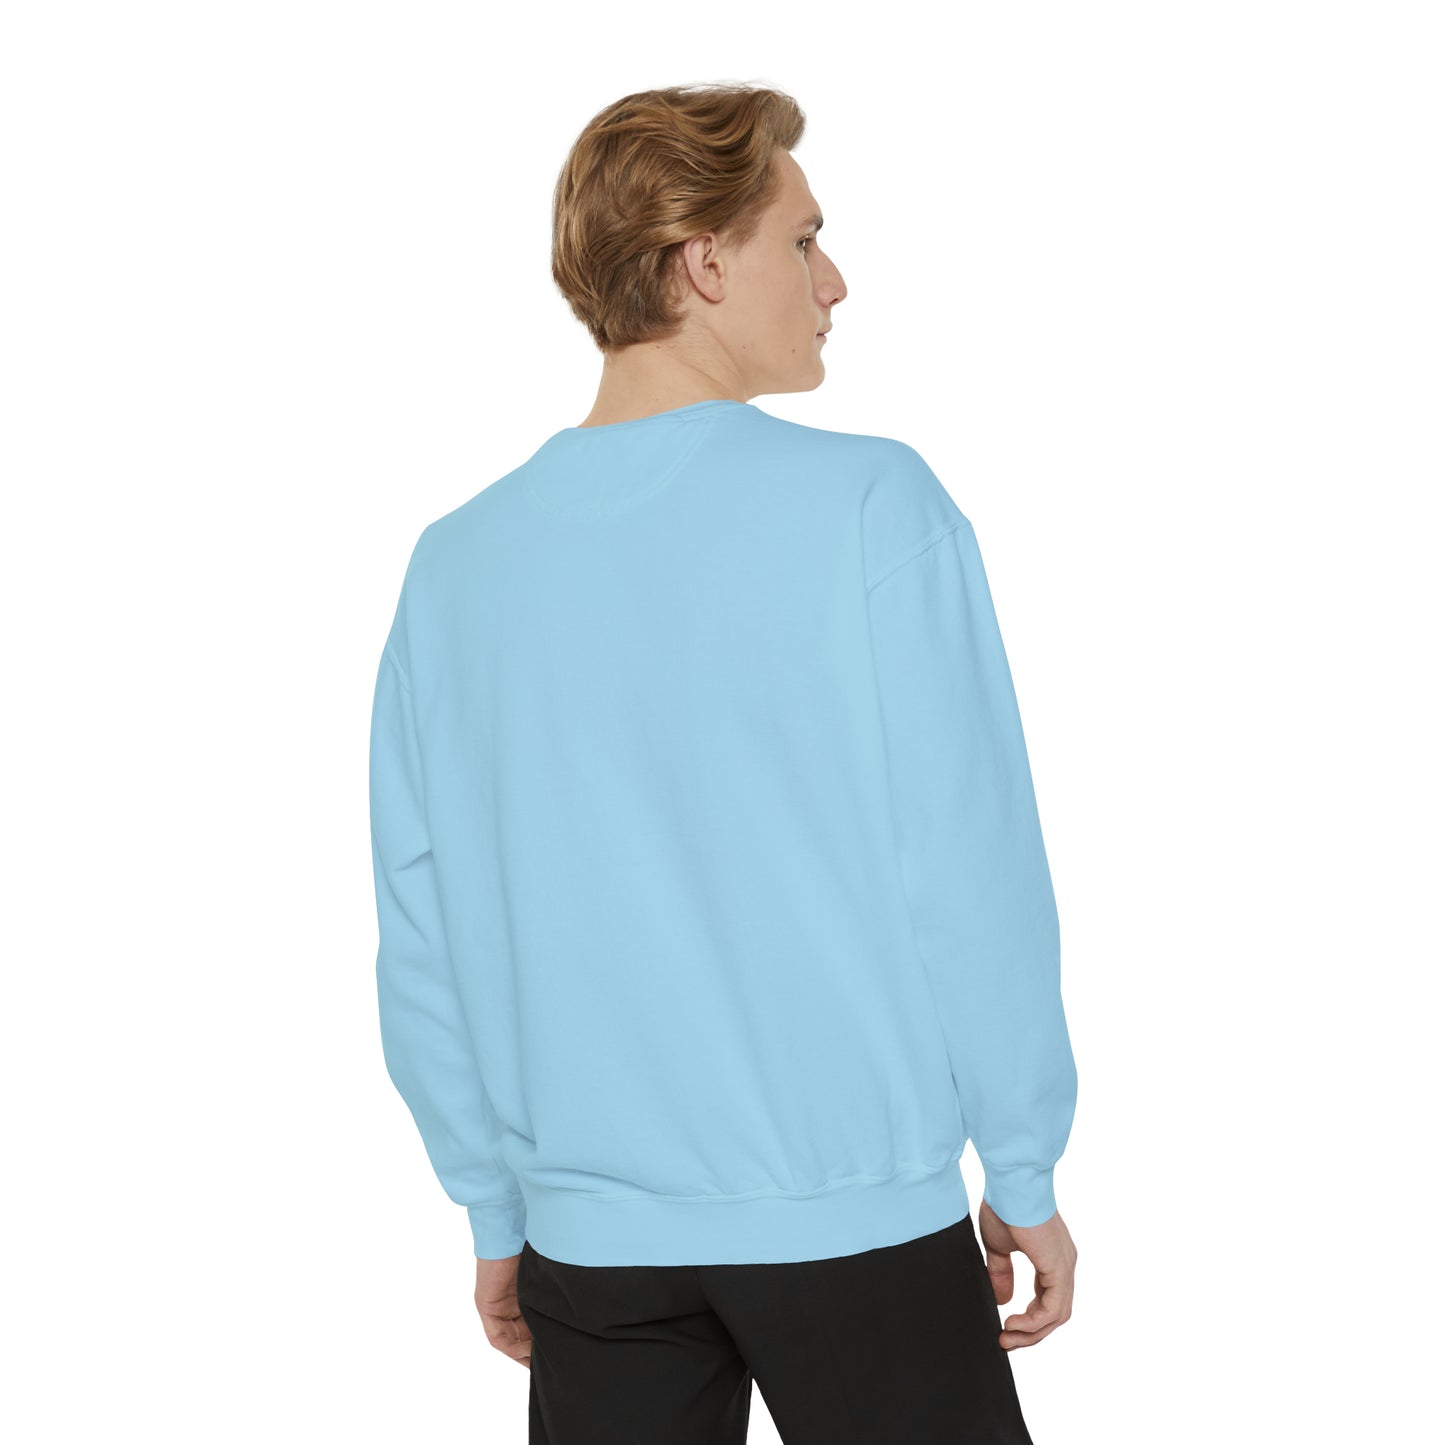 Fighter - logo - Unisex Garment-Dyed Sweatshirt